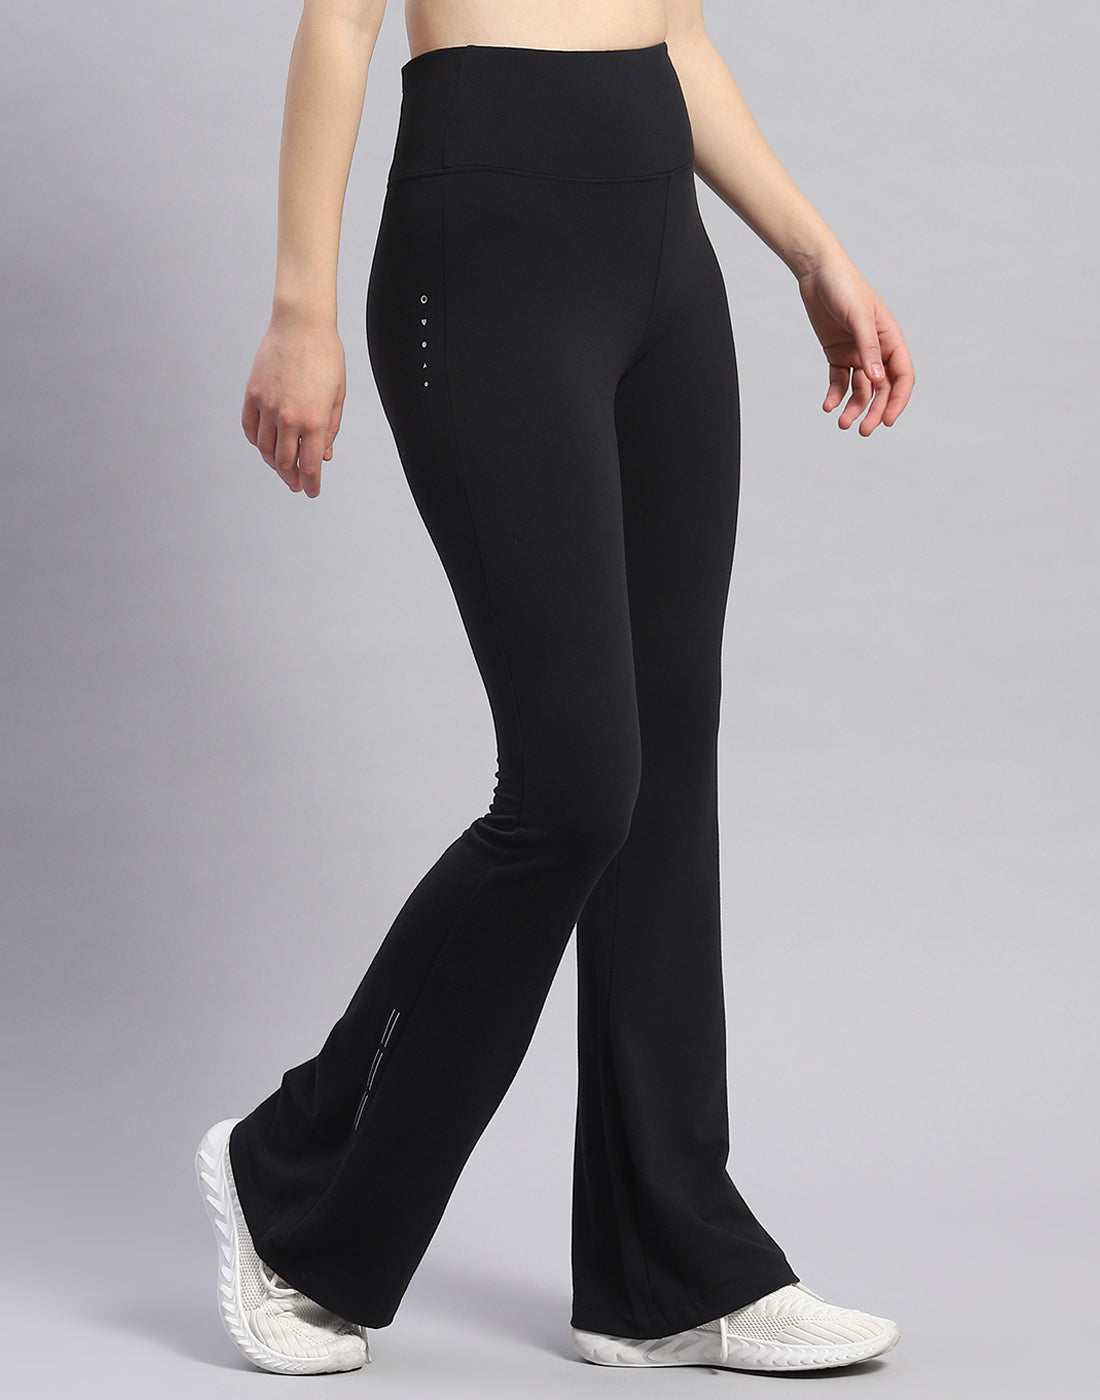 Buy Women Black Solid Regular Fit Yoga Pant Online in India - Rock.it